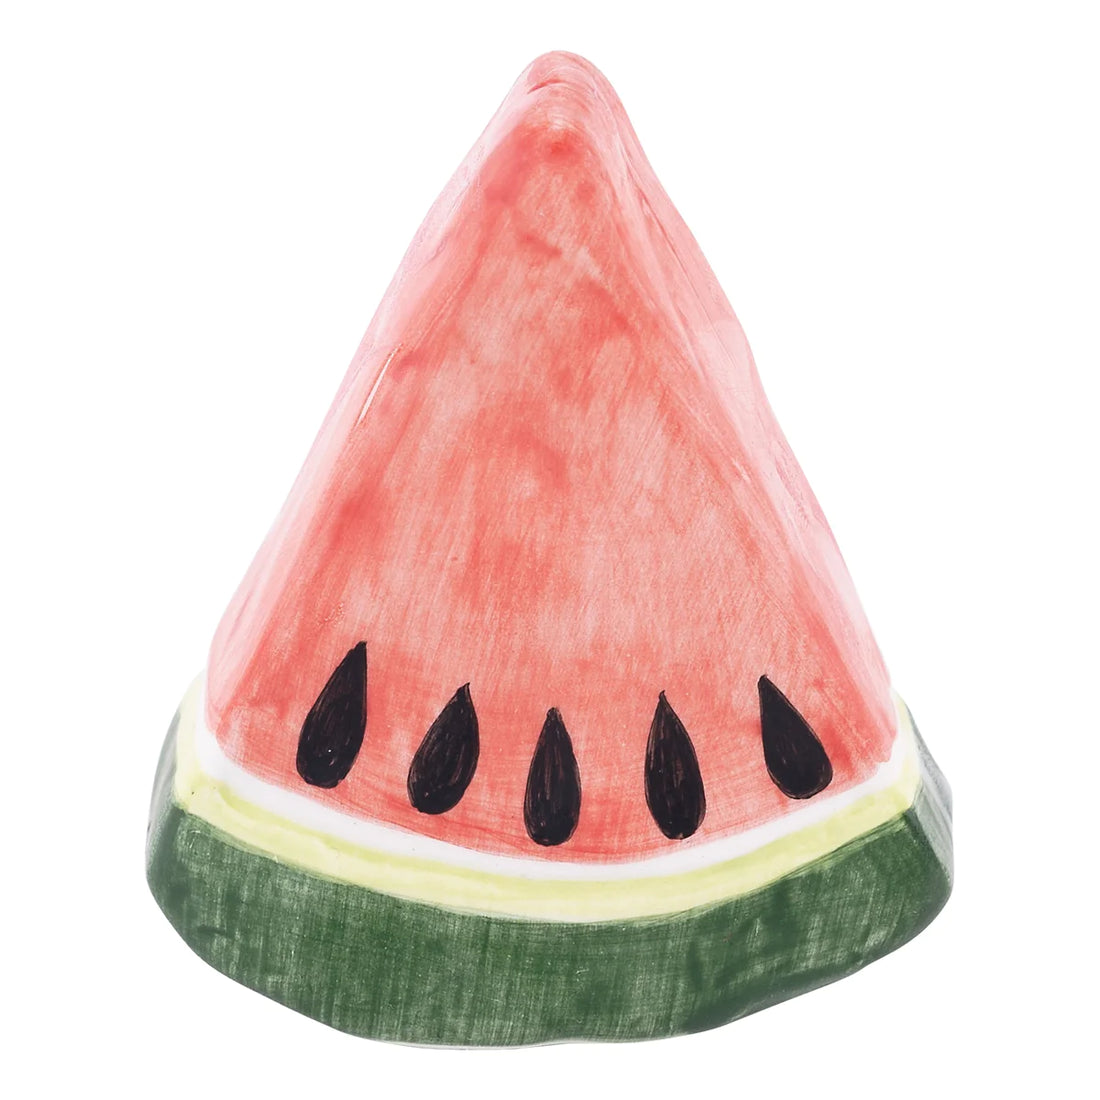 Watermelon Slice Ceramic Figurine - Glory Haus Topper